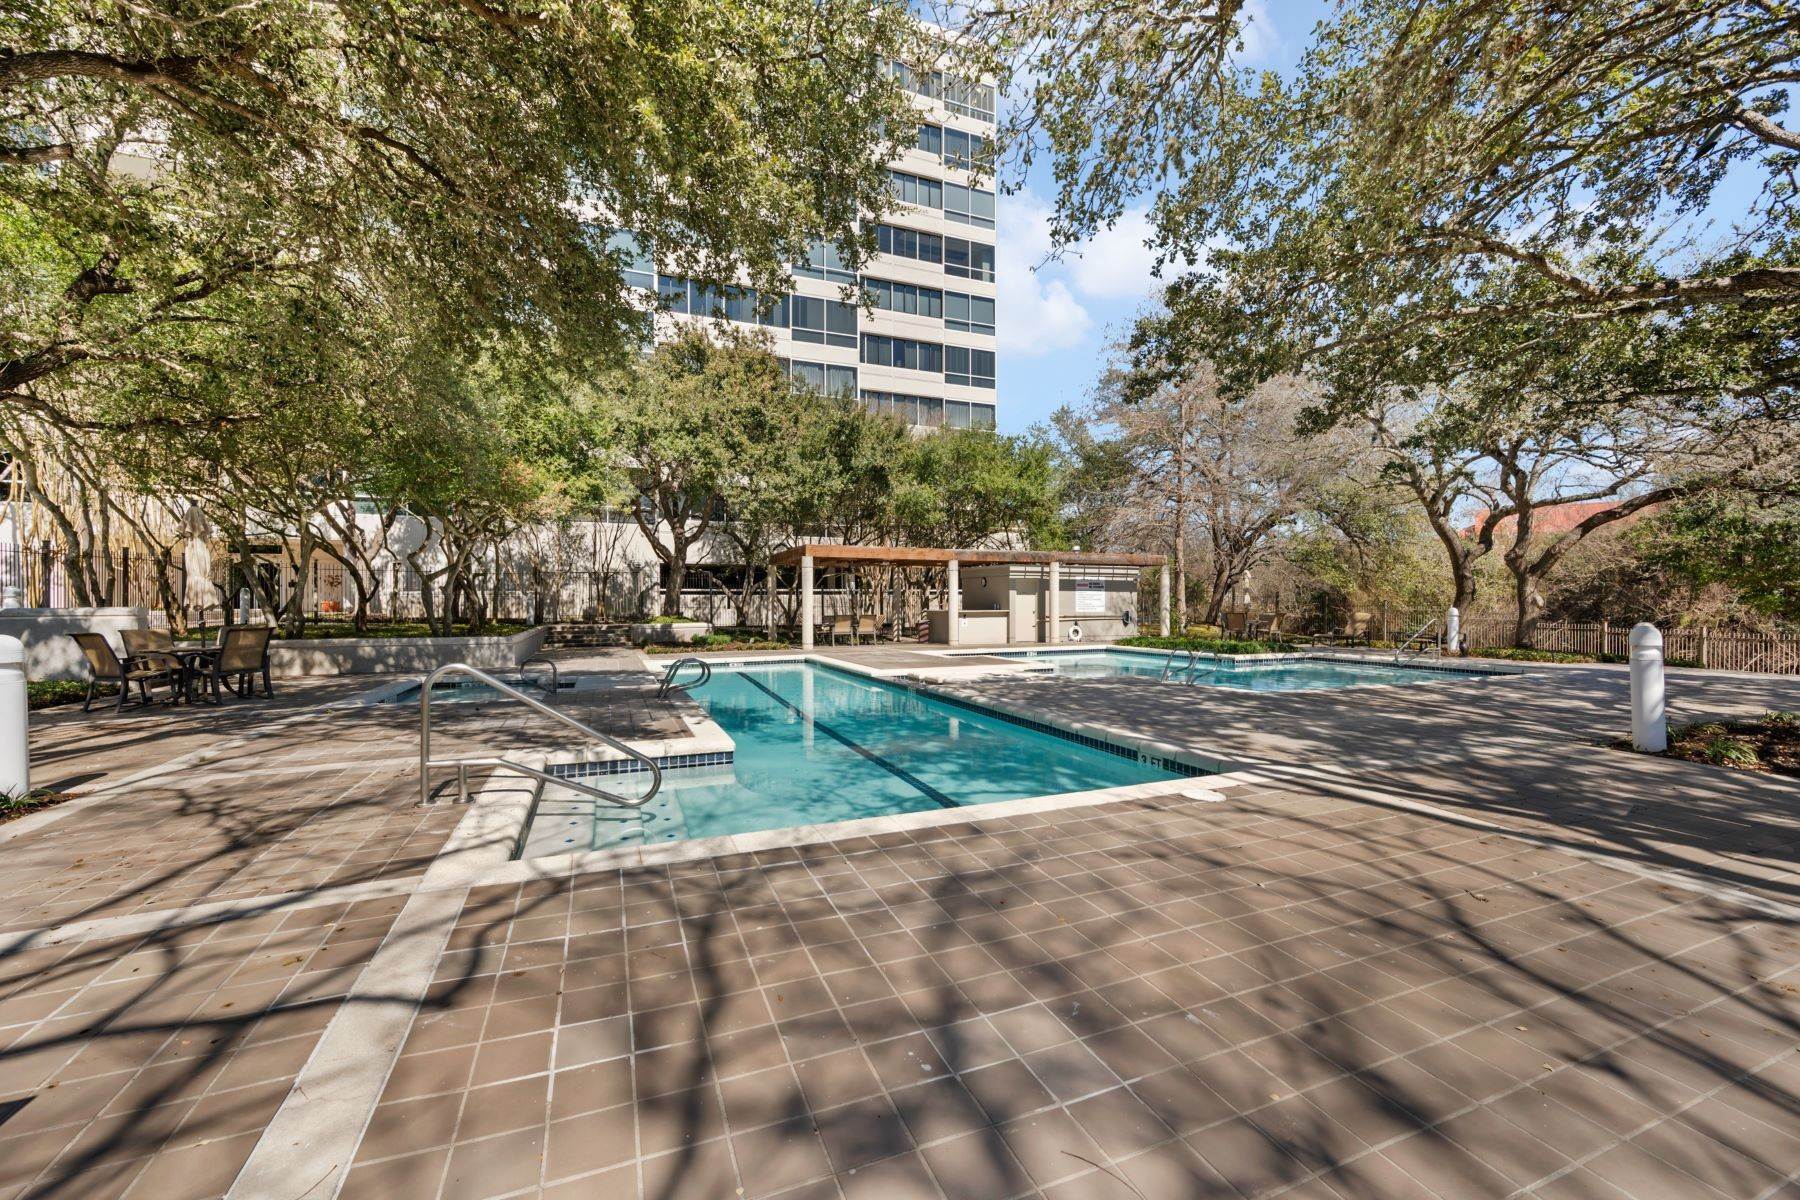 32. Condominiums at 200 Patterson Avenue #210 San Antonio, Texas 78209 United States